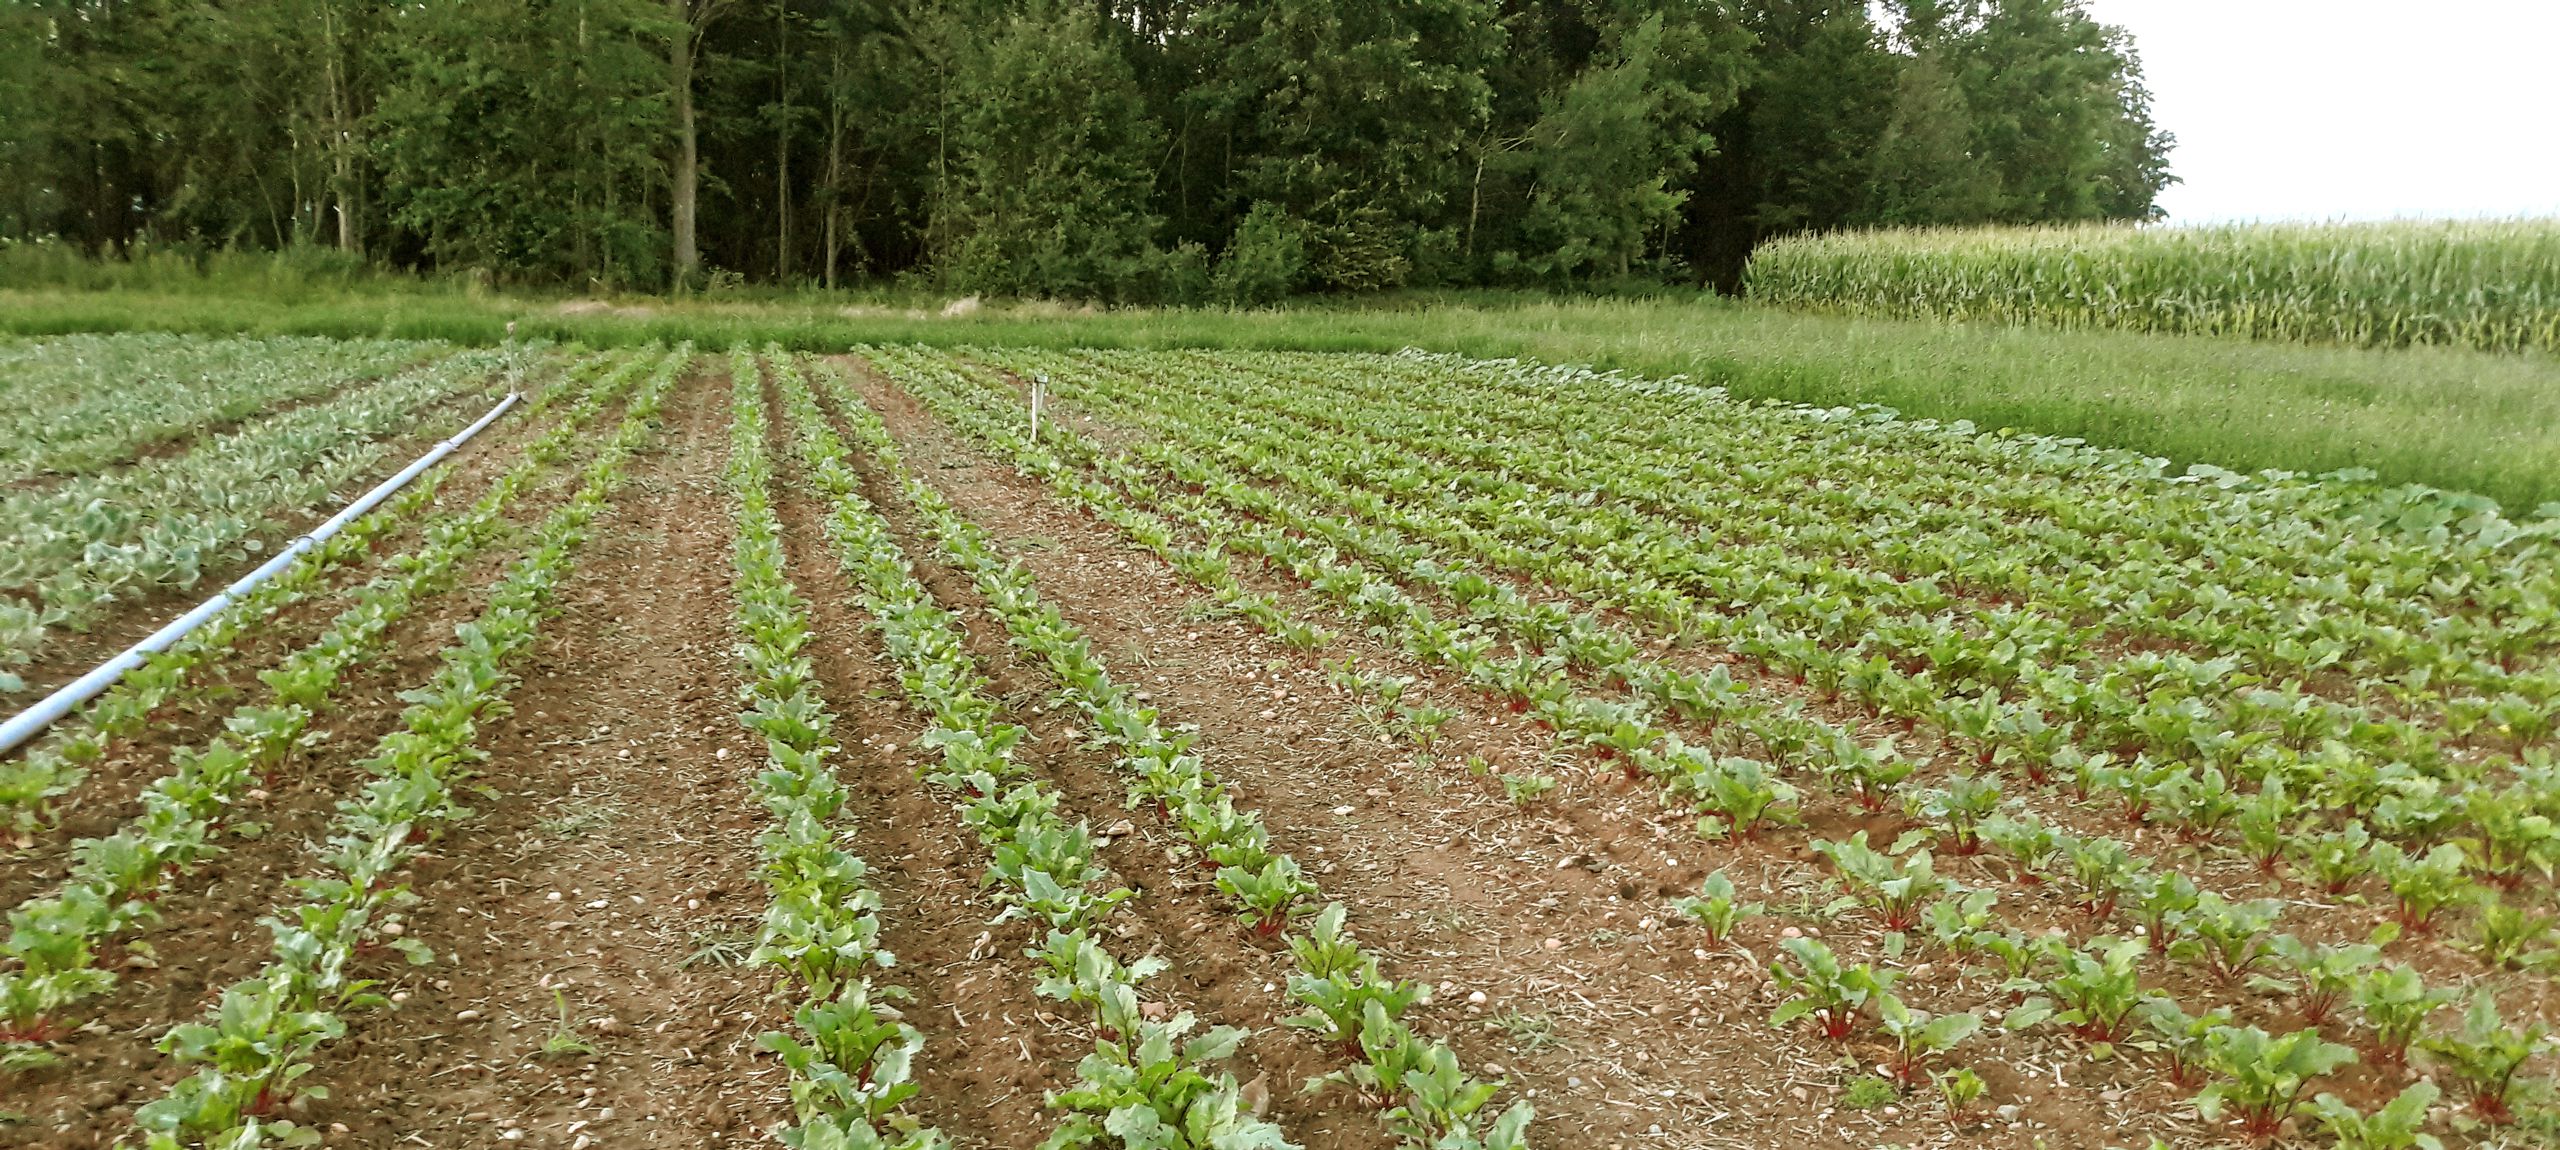 Biohof Arzberger Salatanbau auf dem Feld